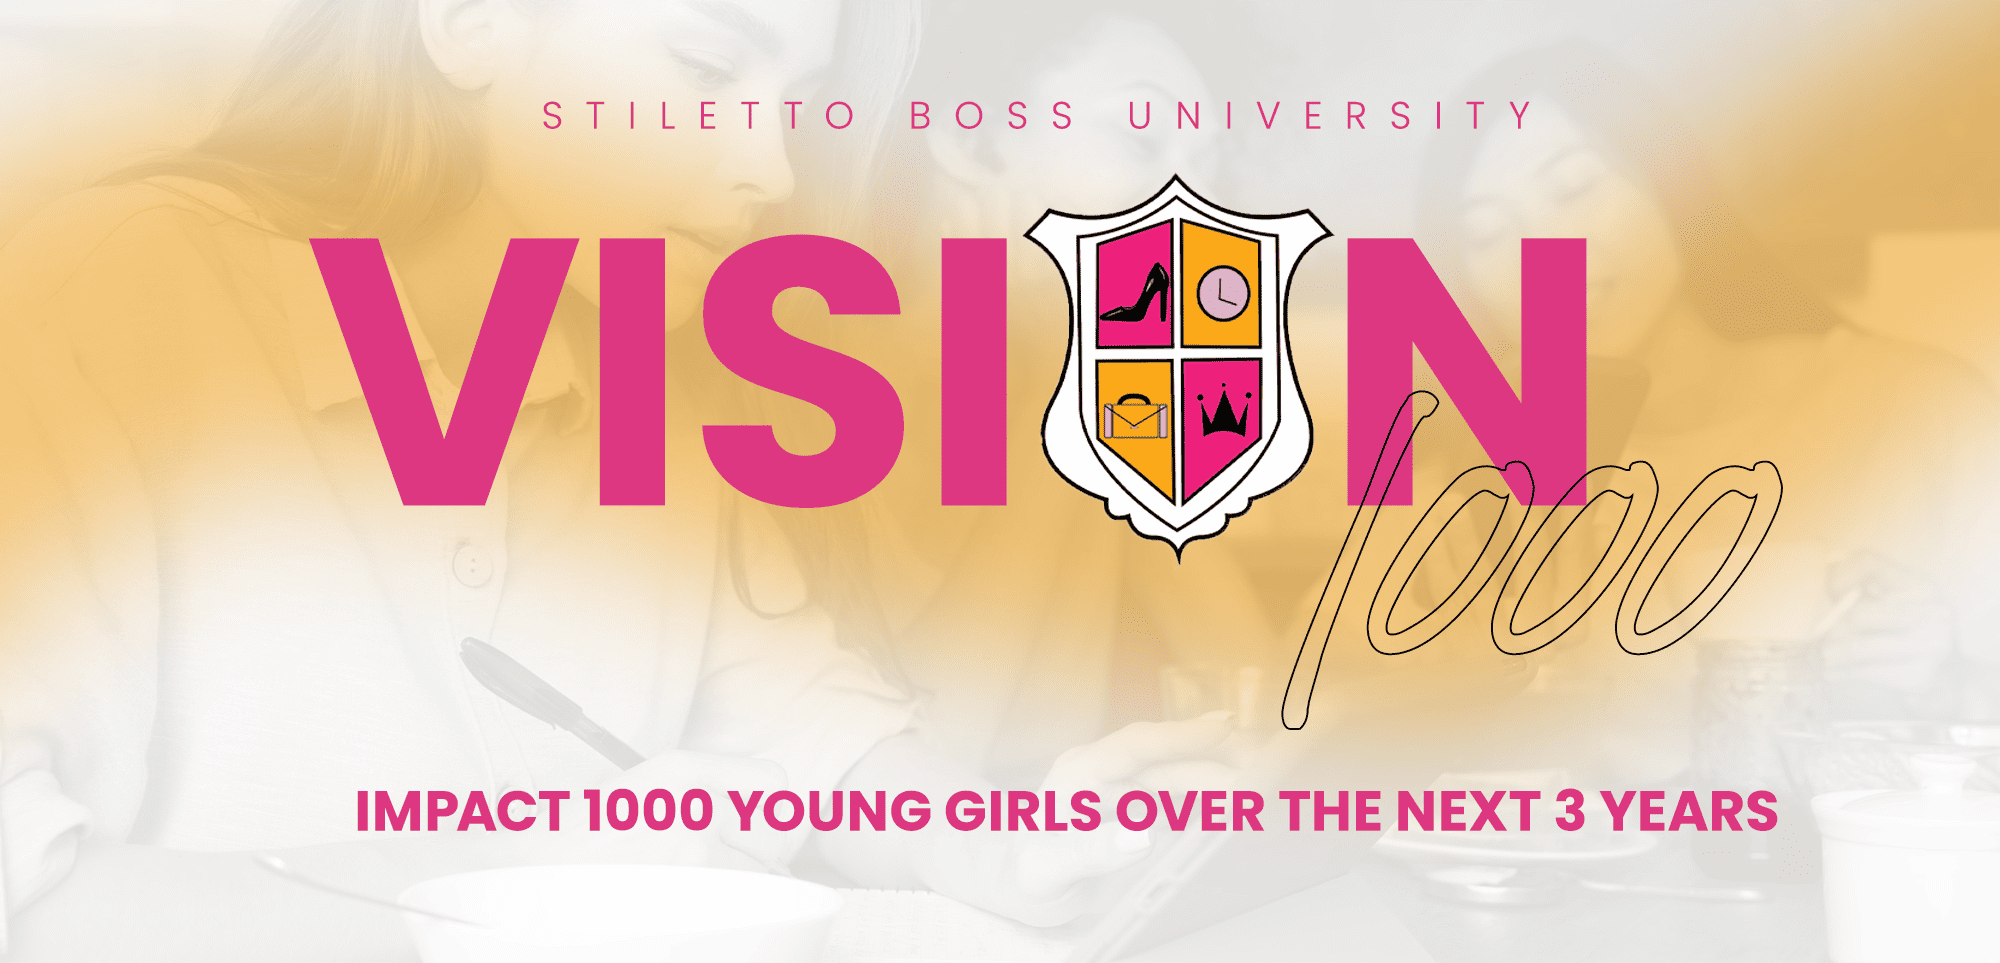 Stiletto Boss University - Vision 1000